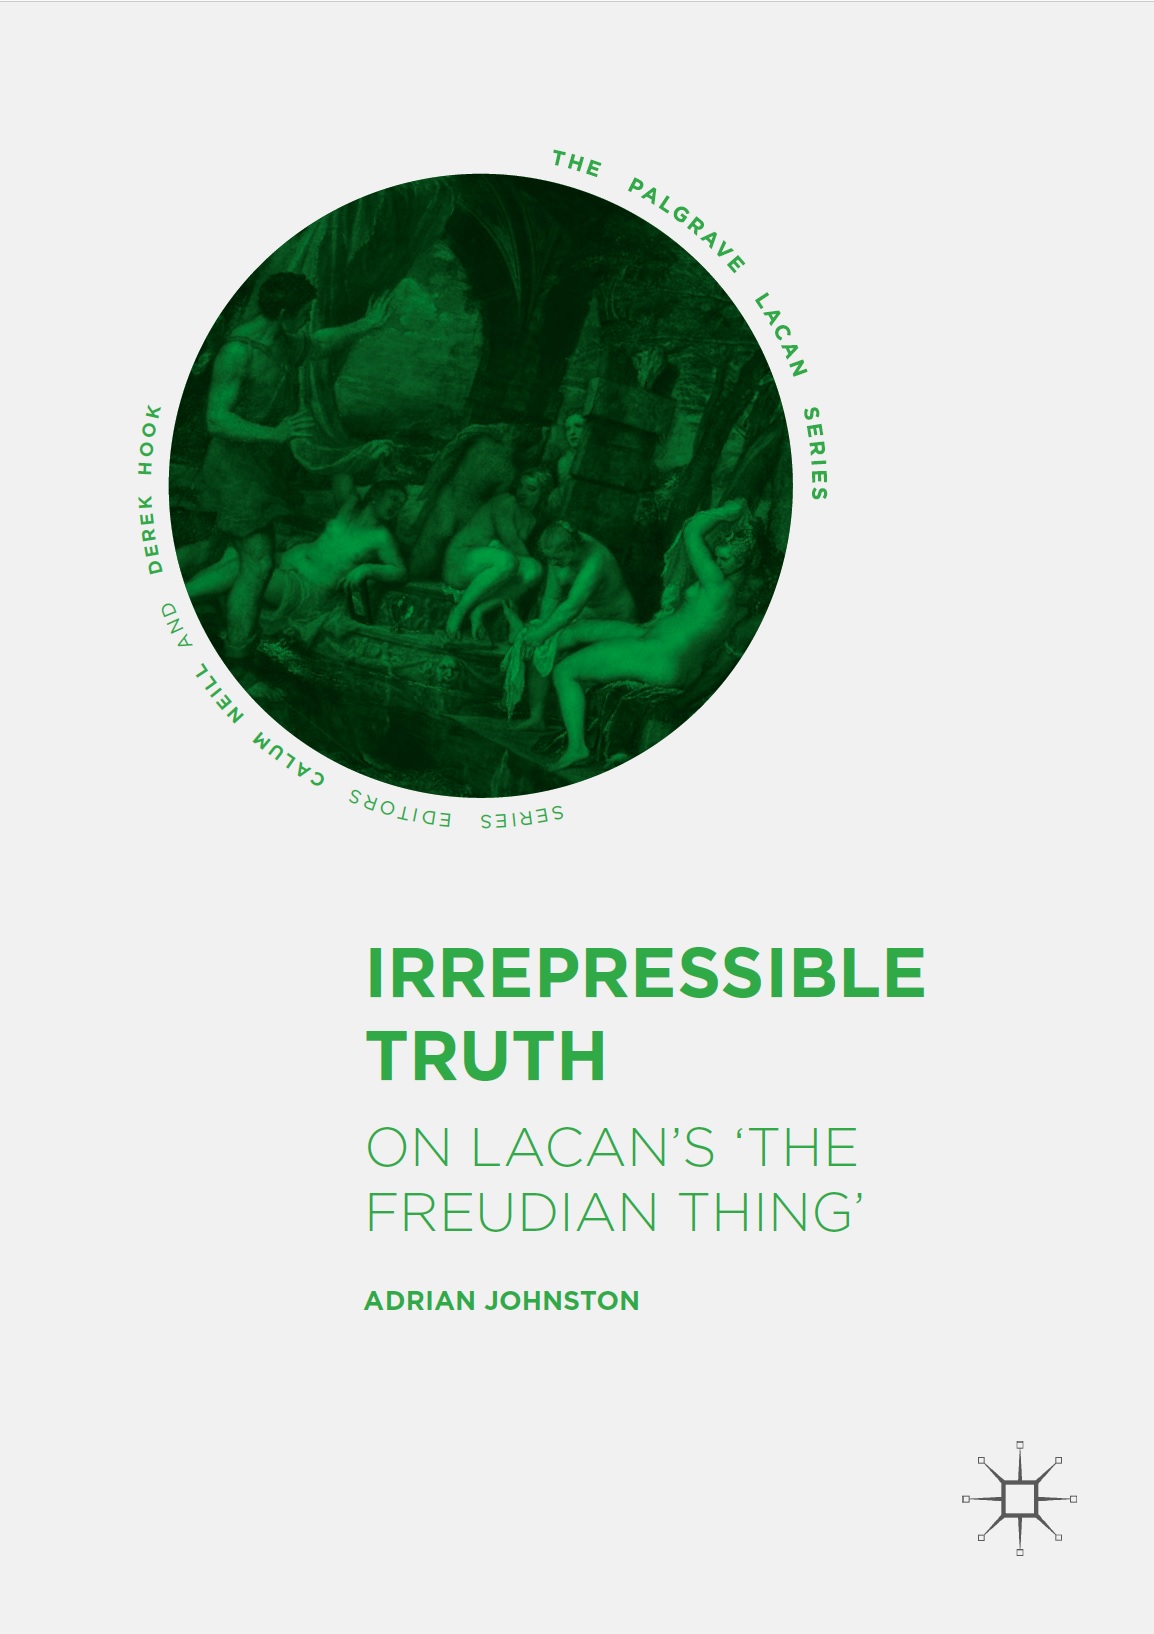 Adrian-johnston-irrepressible-truth-theoryleaks.jpg